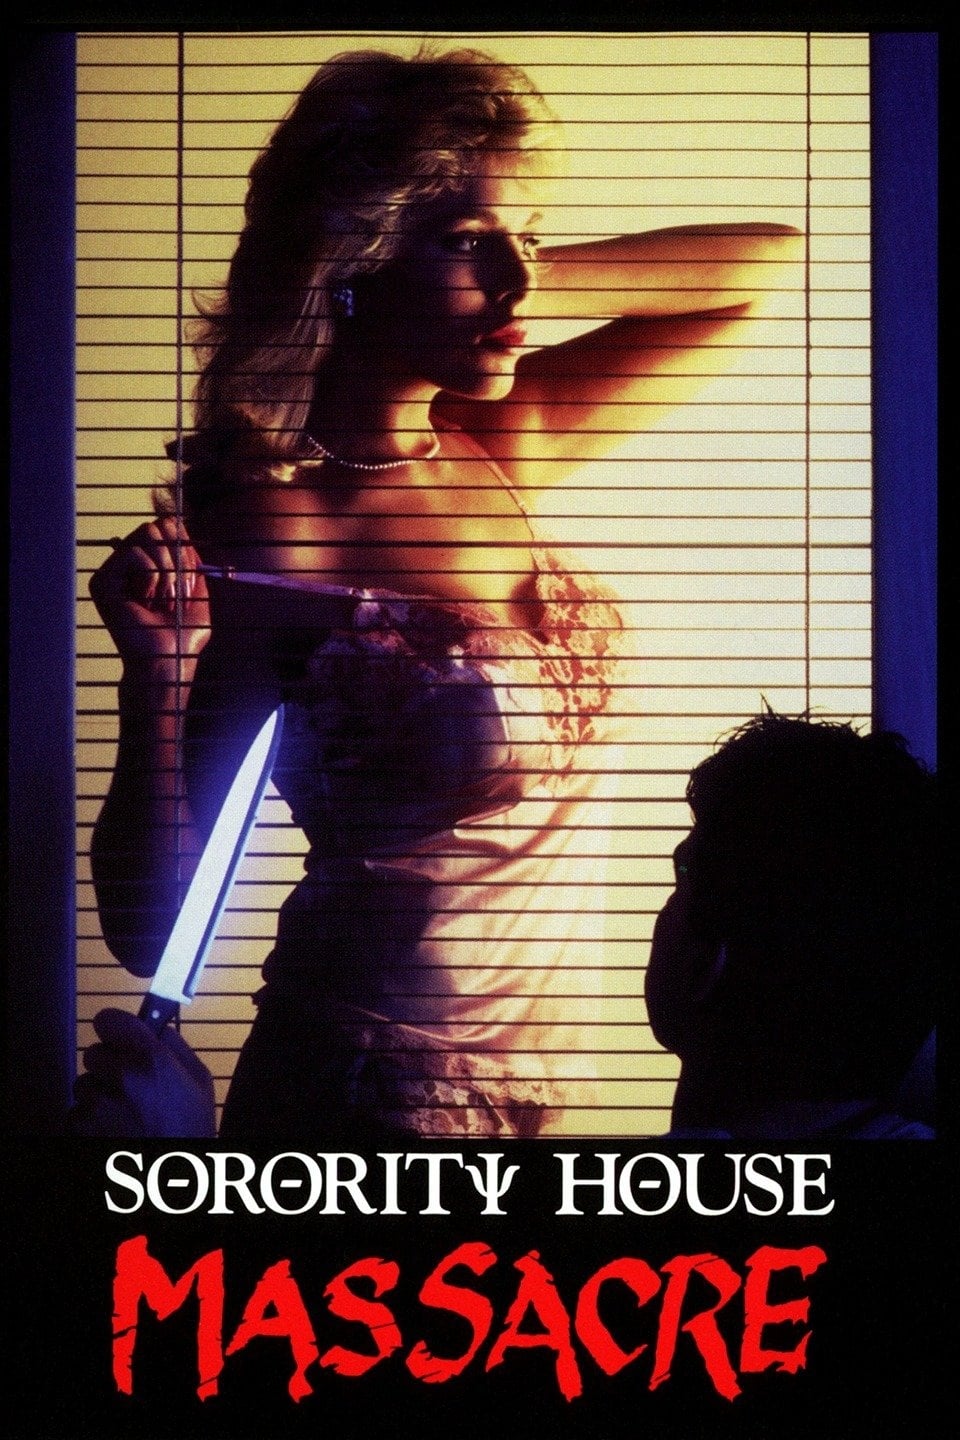 Poster for the movie "Sorority House Massacre"